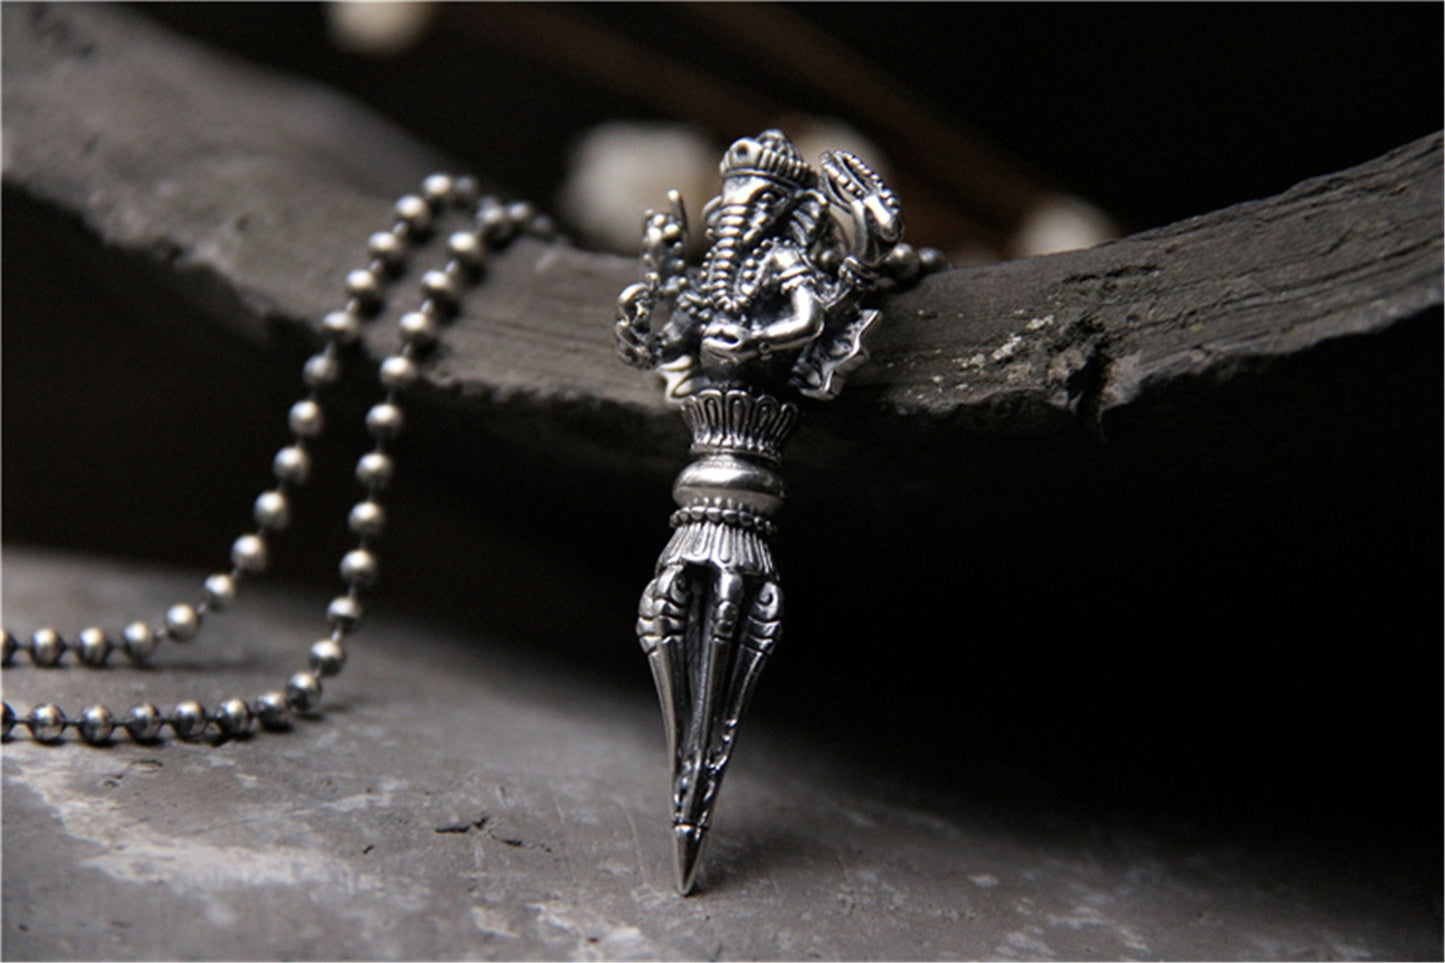 Gandhanra Dorje Phurba Dagger Necklace,Ganesha Pendant(Elephant God),Kila Buddhist Protection Amulet, Sterling Silver Tibetan Jewelry